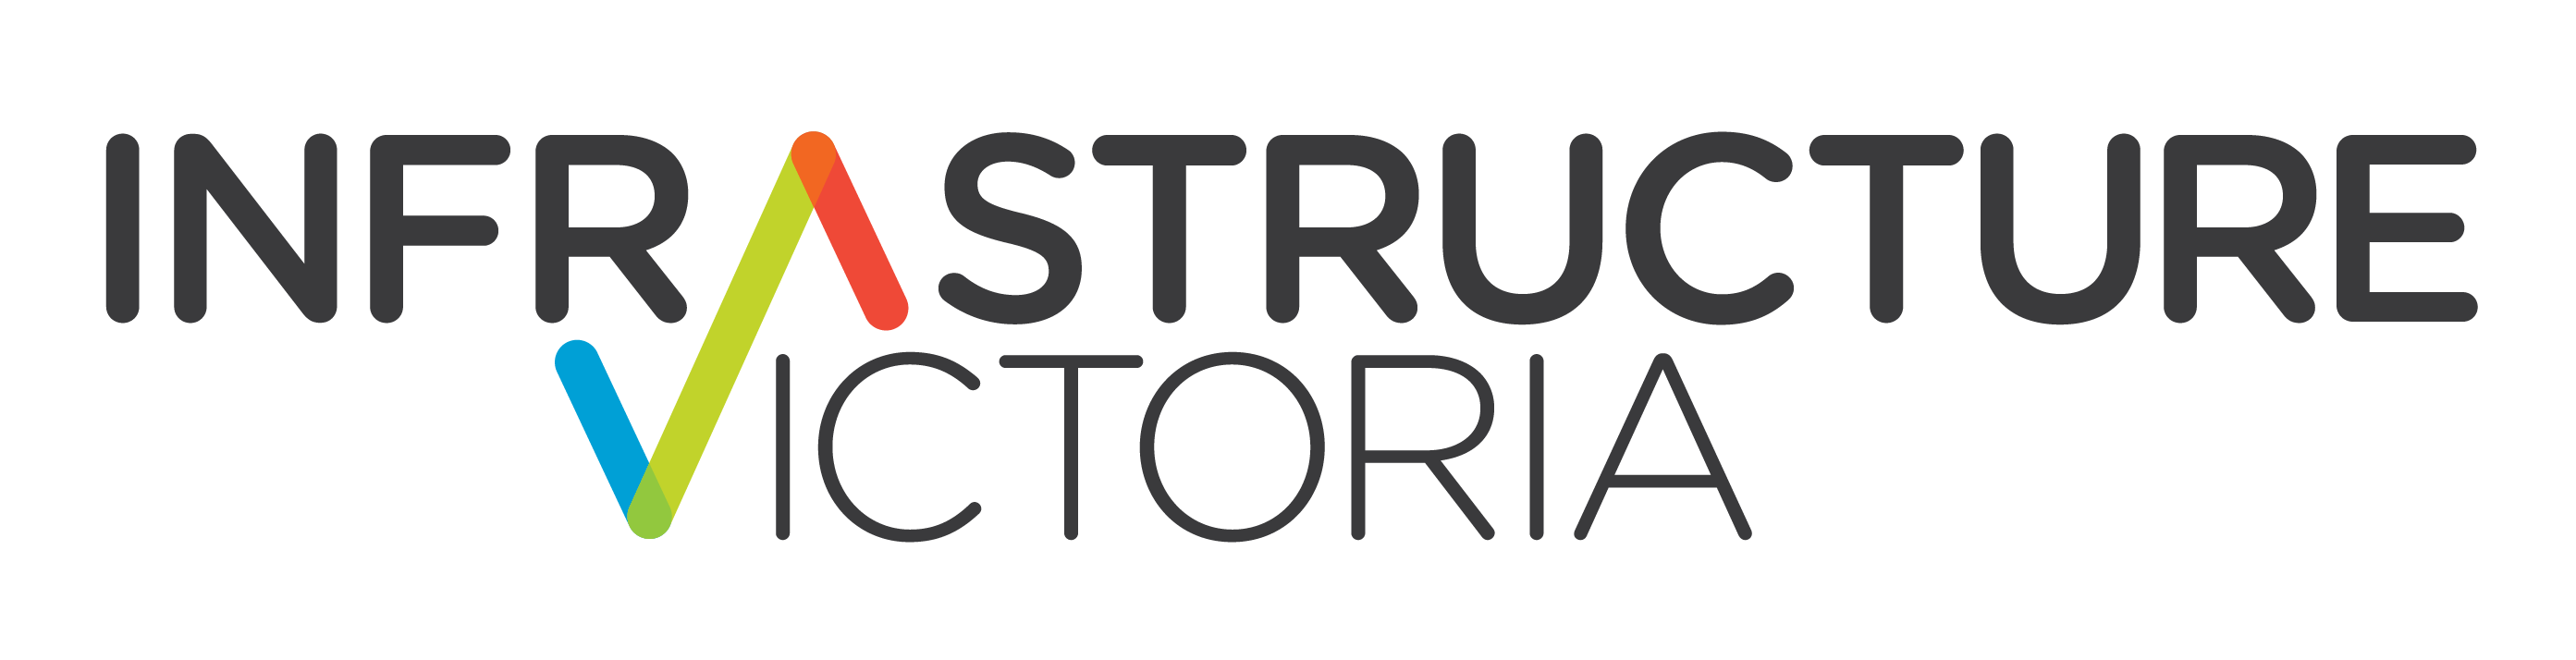 Victoria Logo - Home